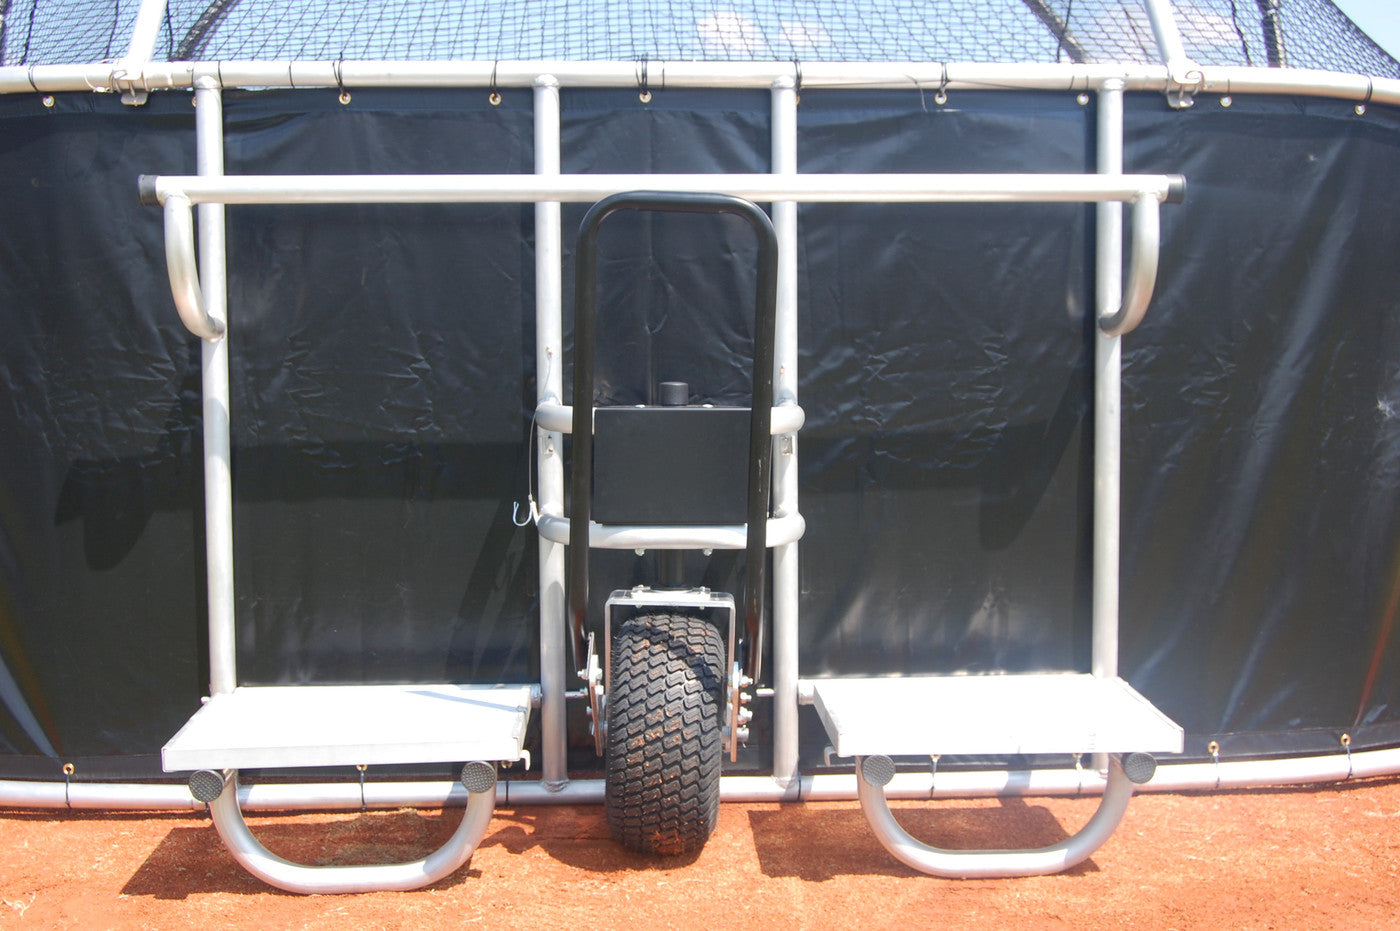 ProCage™ Professional Portable Batting Cage